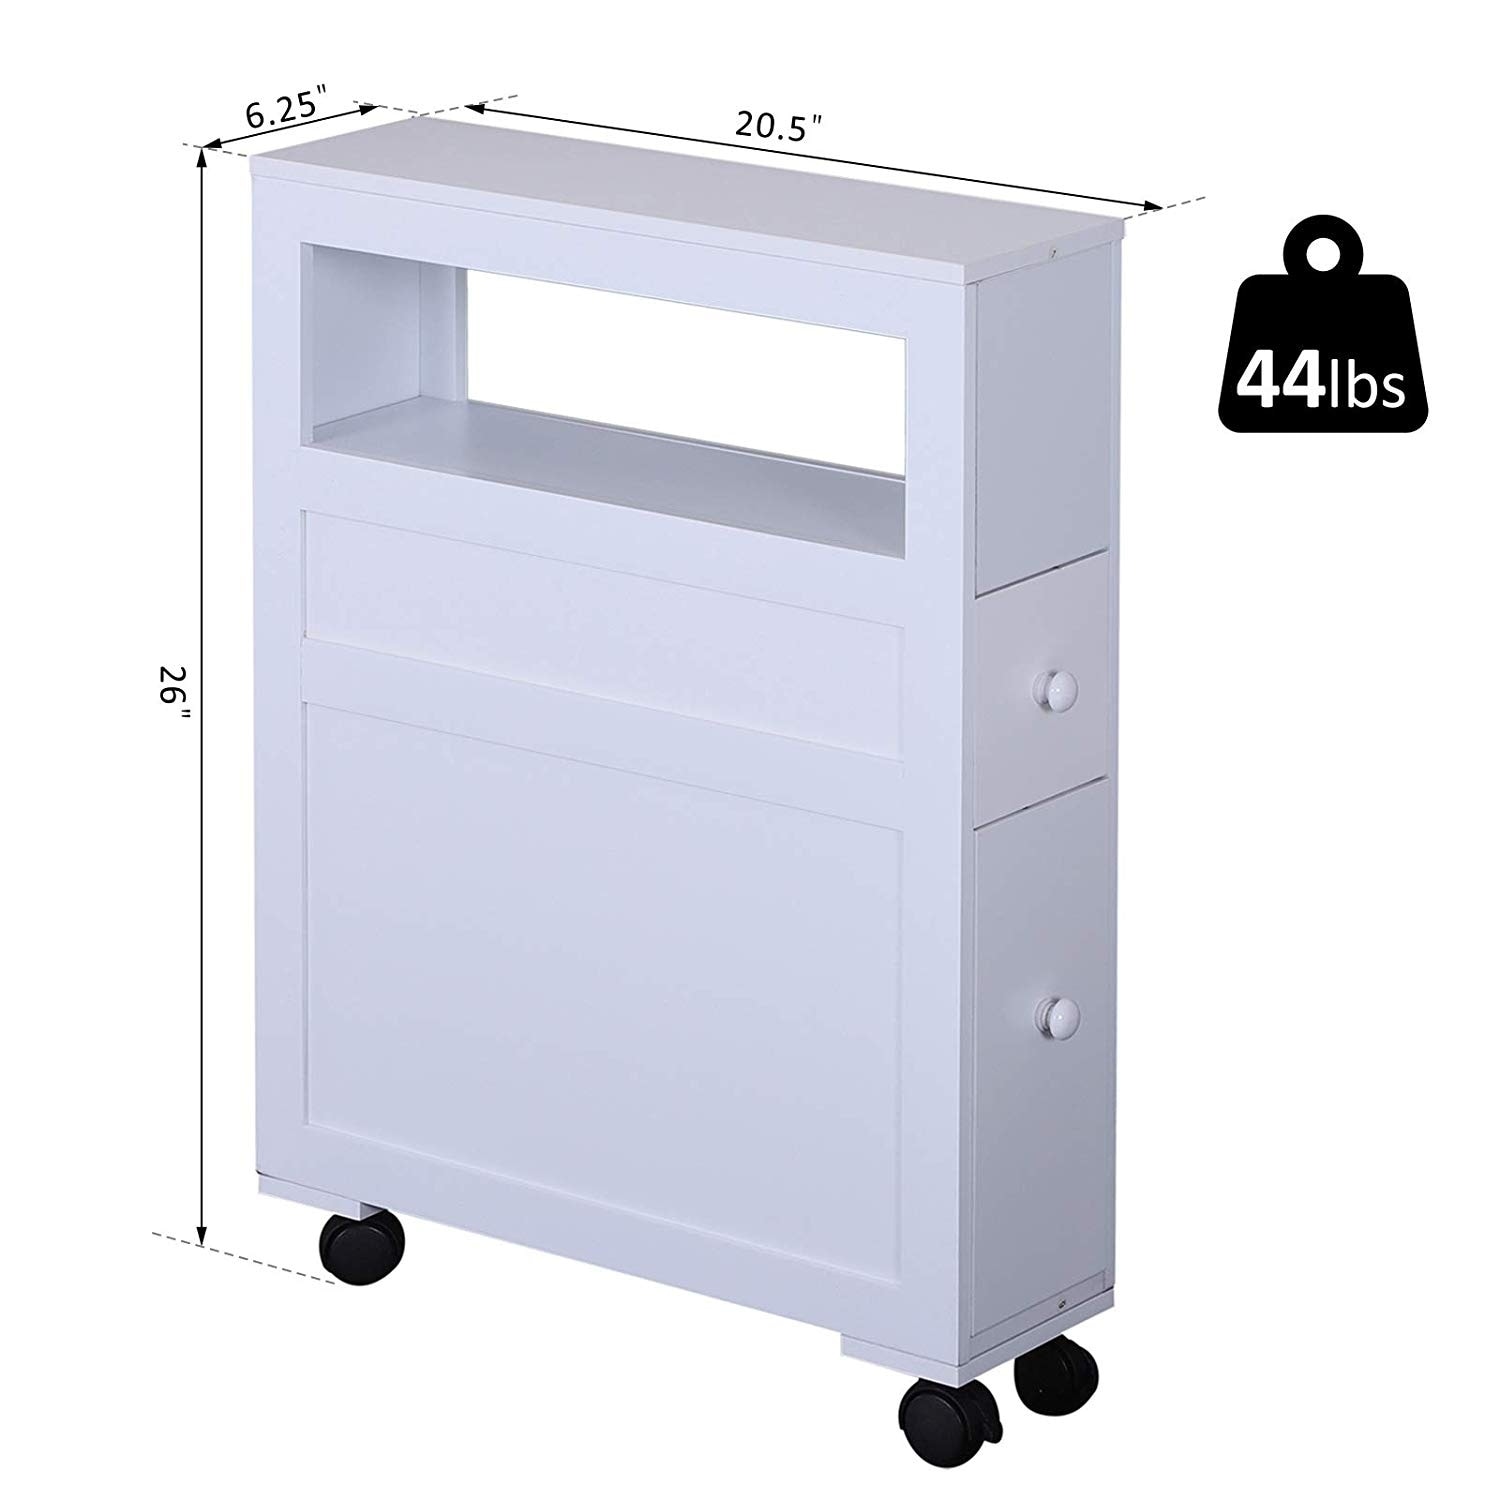 HOMCOM 165cm Freestanding Slimline Bathroom Storage Cabinet w/ 6